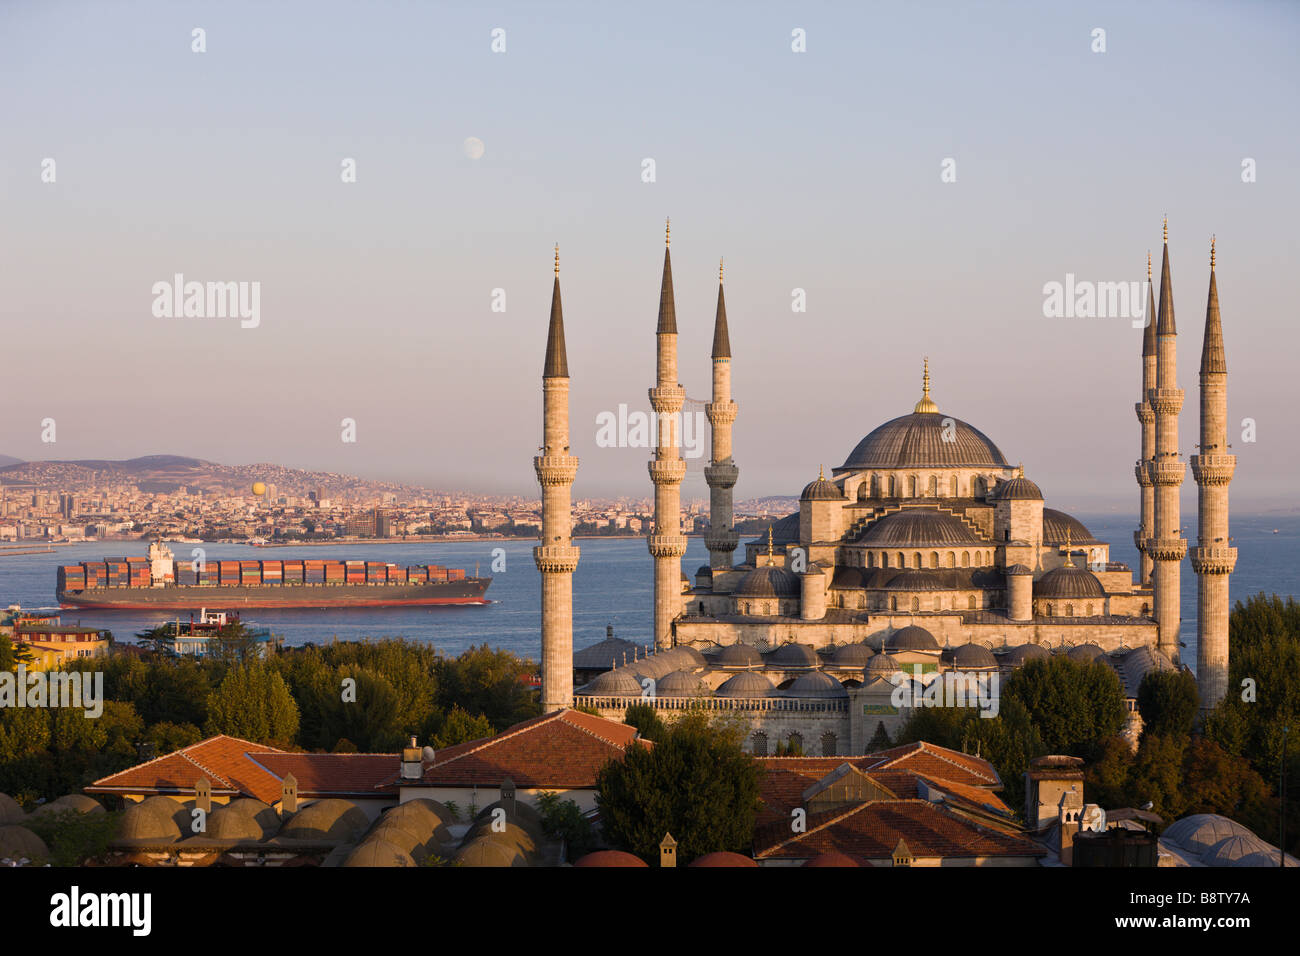 Sultan-Ahmed-Moschee-blaue Moschee-Istanbul-Türkei Stockfoto